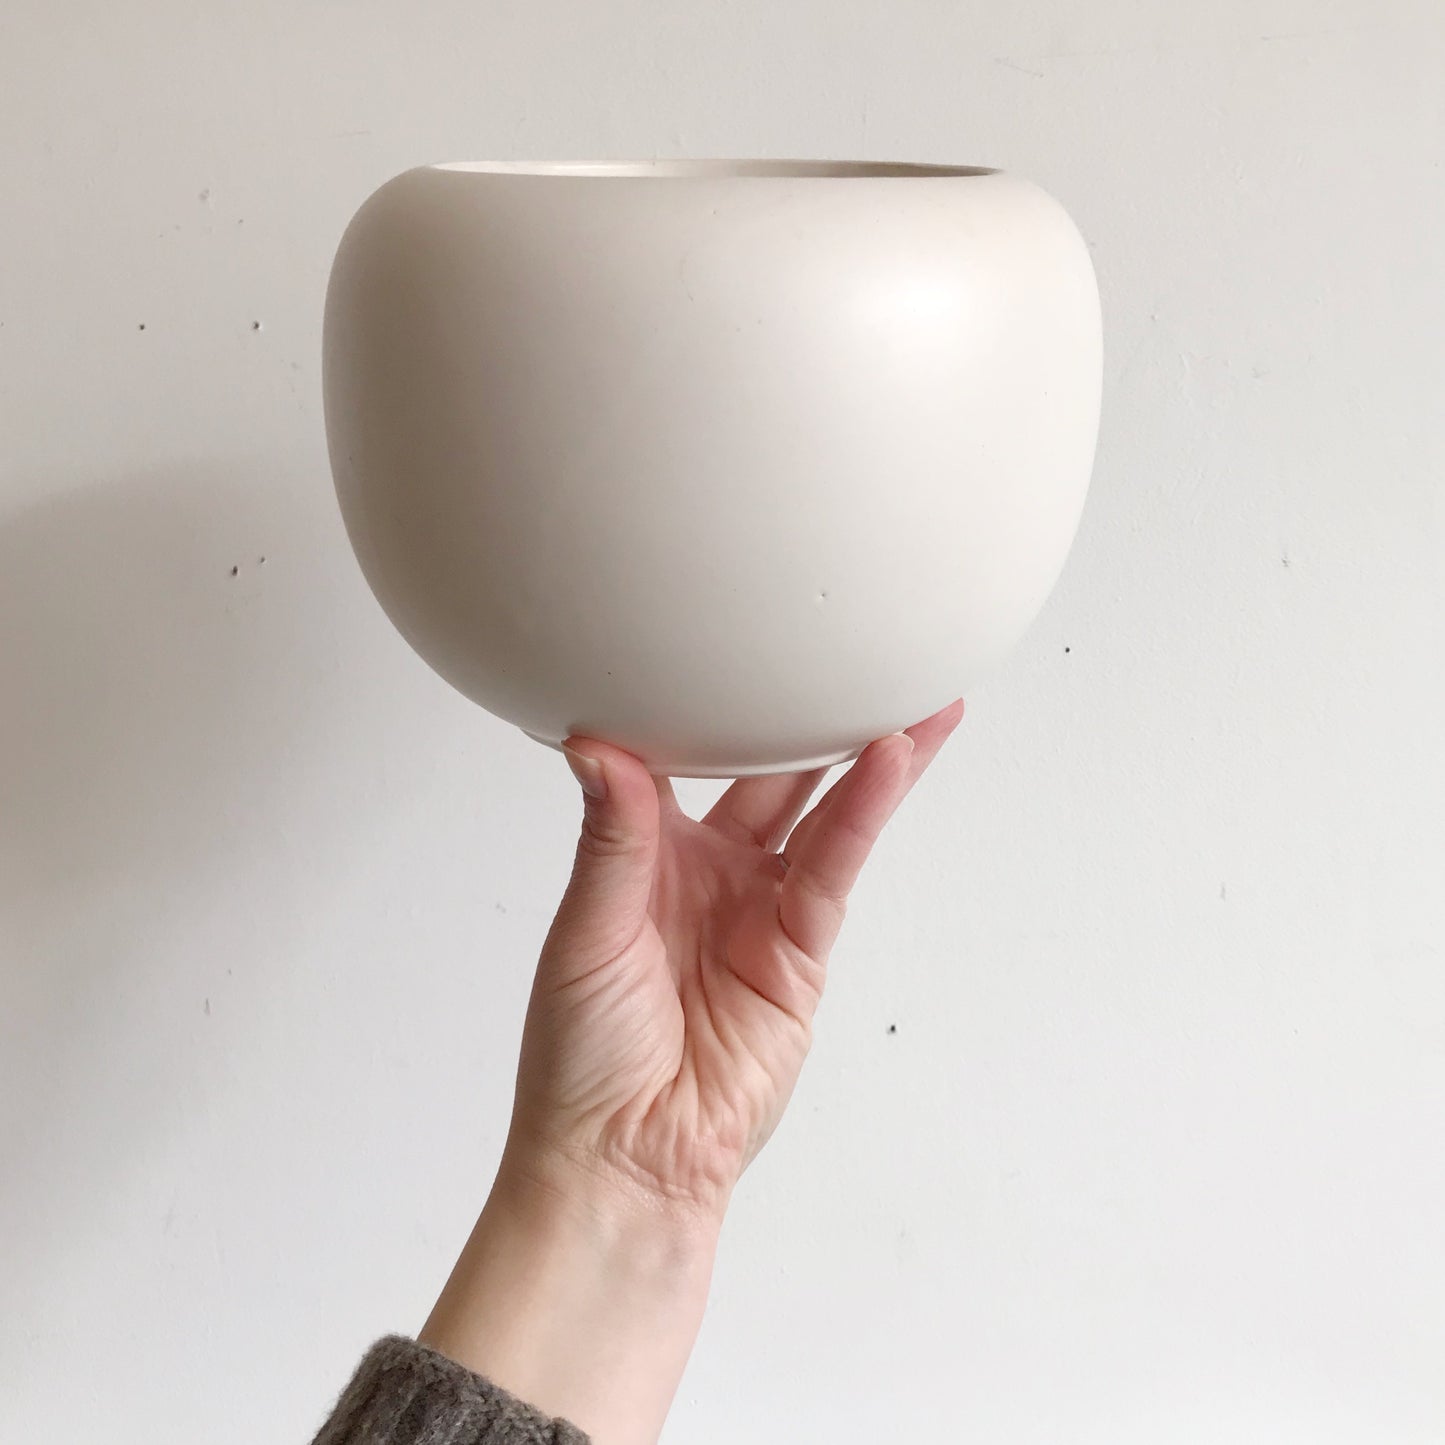 Large Vintage Ceramic Spherical Planter